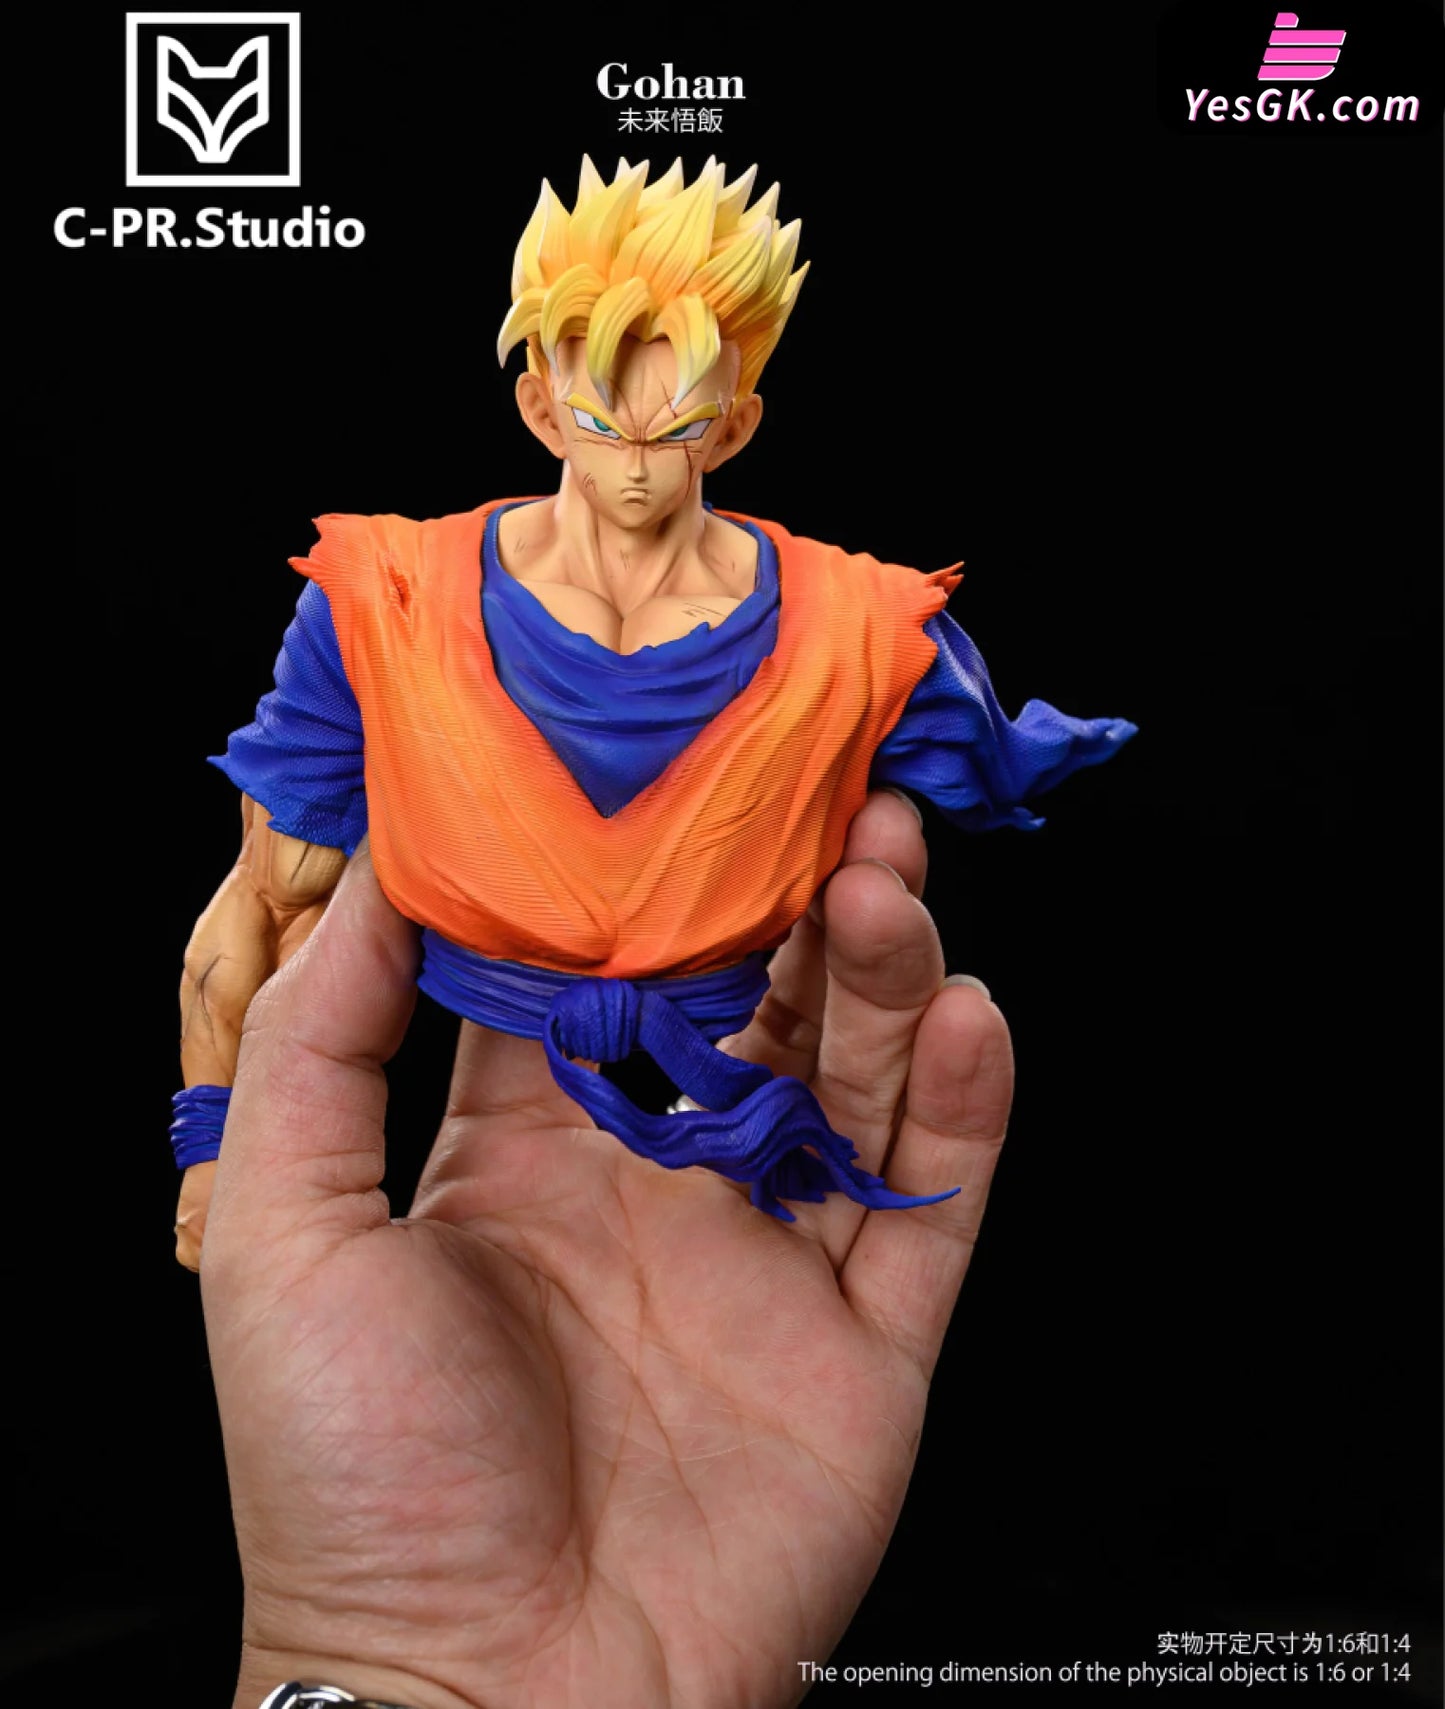 Dragon Ball Z Warrior Series: No.1 Future Gohan Statue - Cpr Studio [Pre-Order]